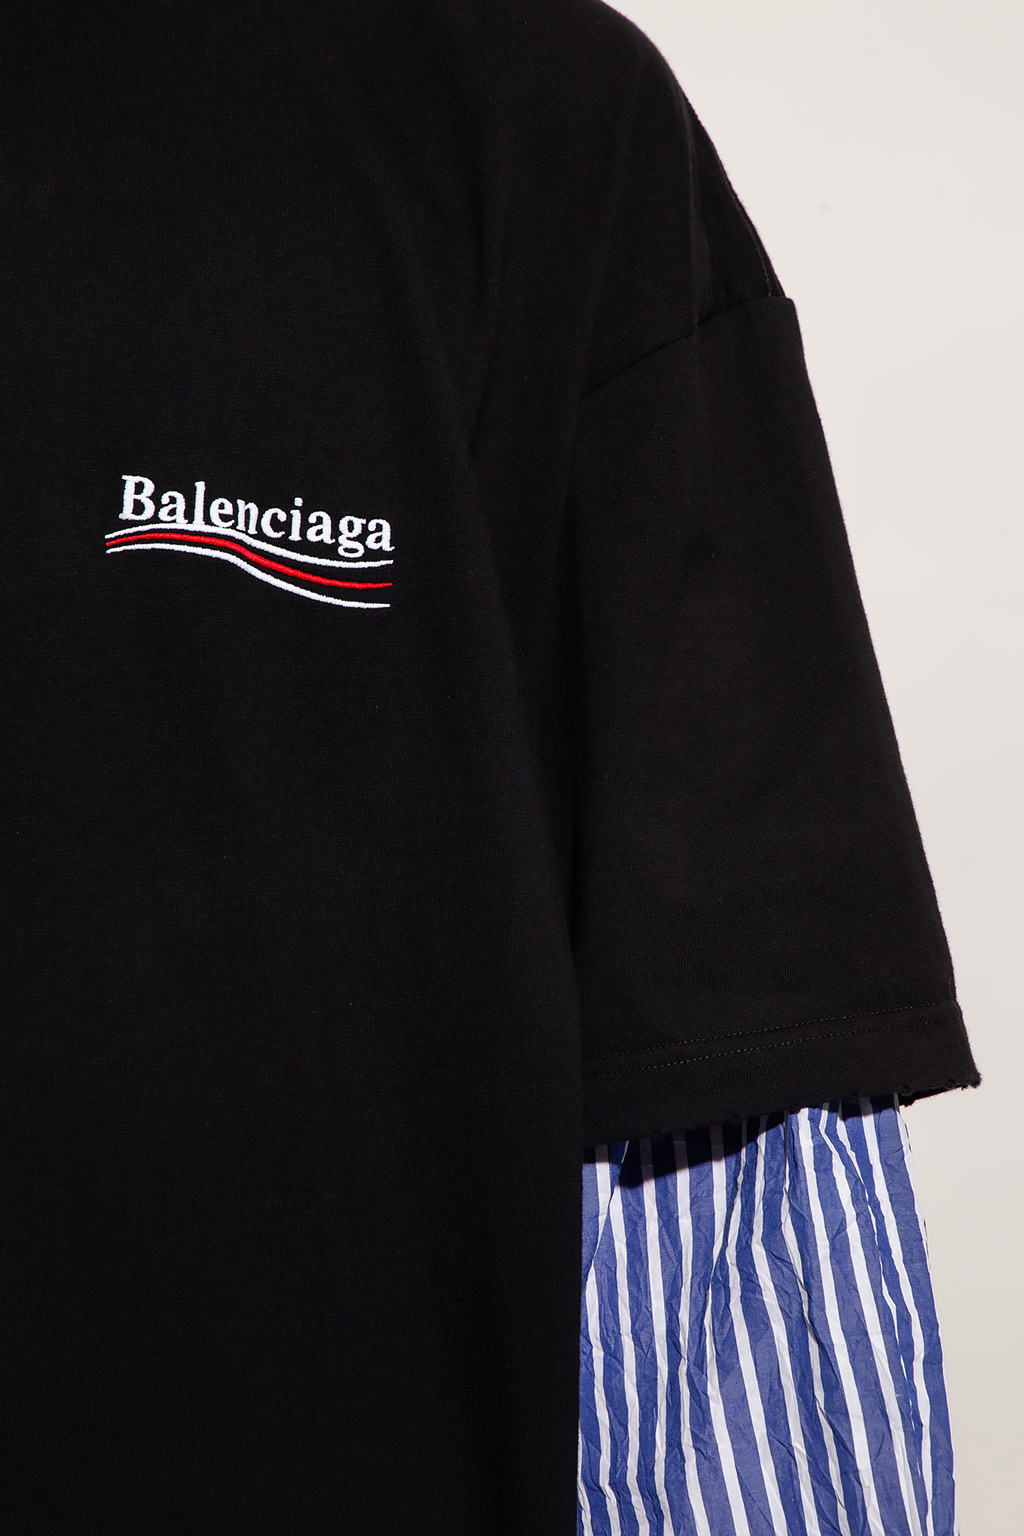 Balenciaga Easy Care Shirts 2 Pack